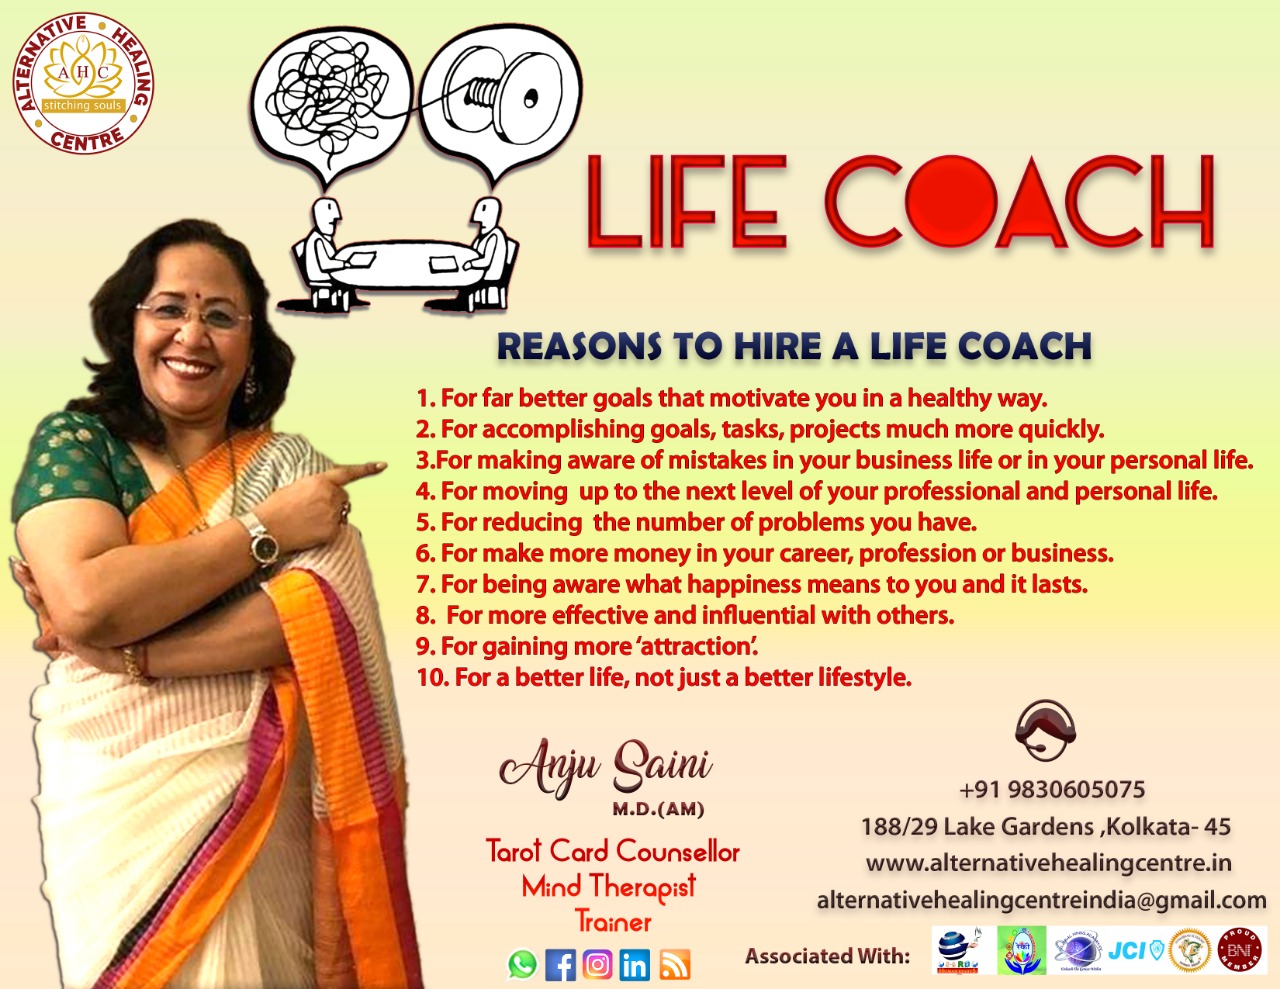 Life Coaching Sessions by Anju Saini - Patna